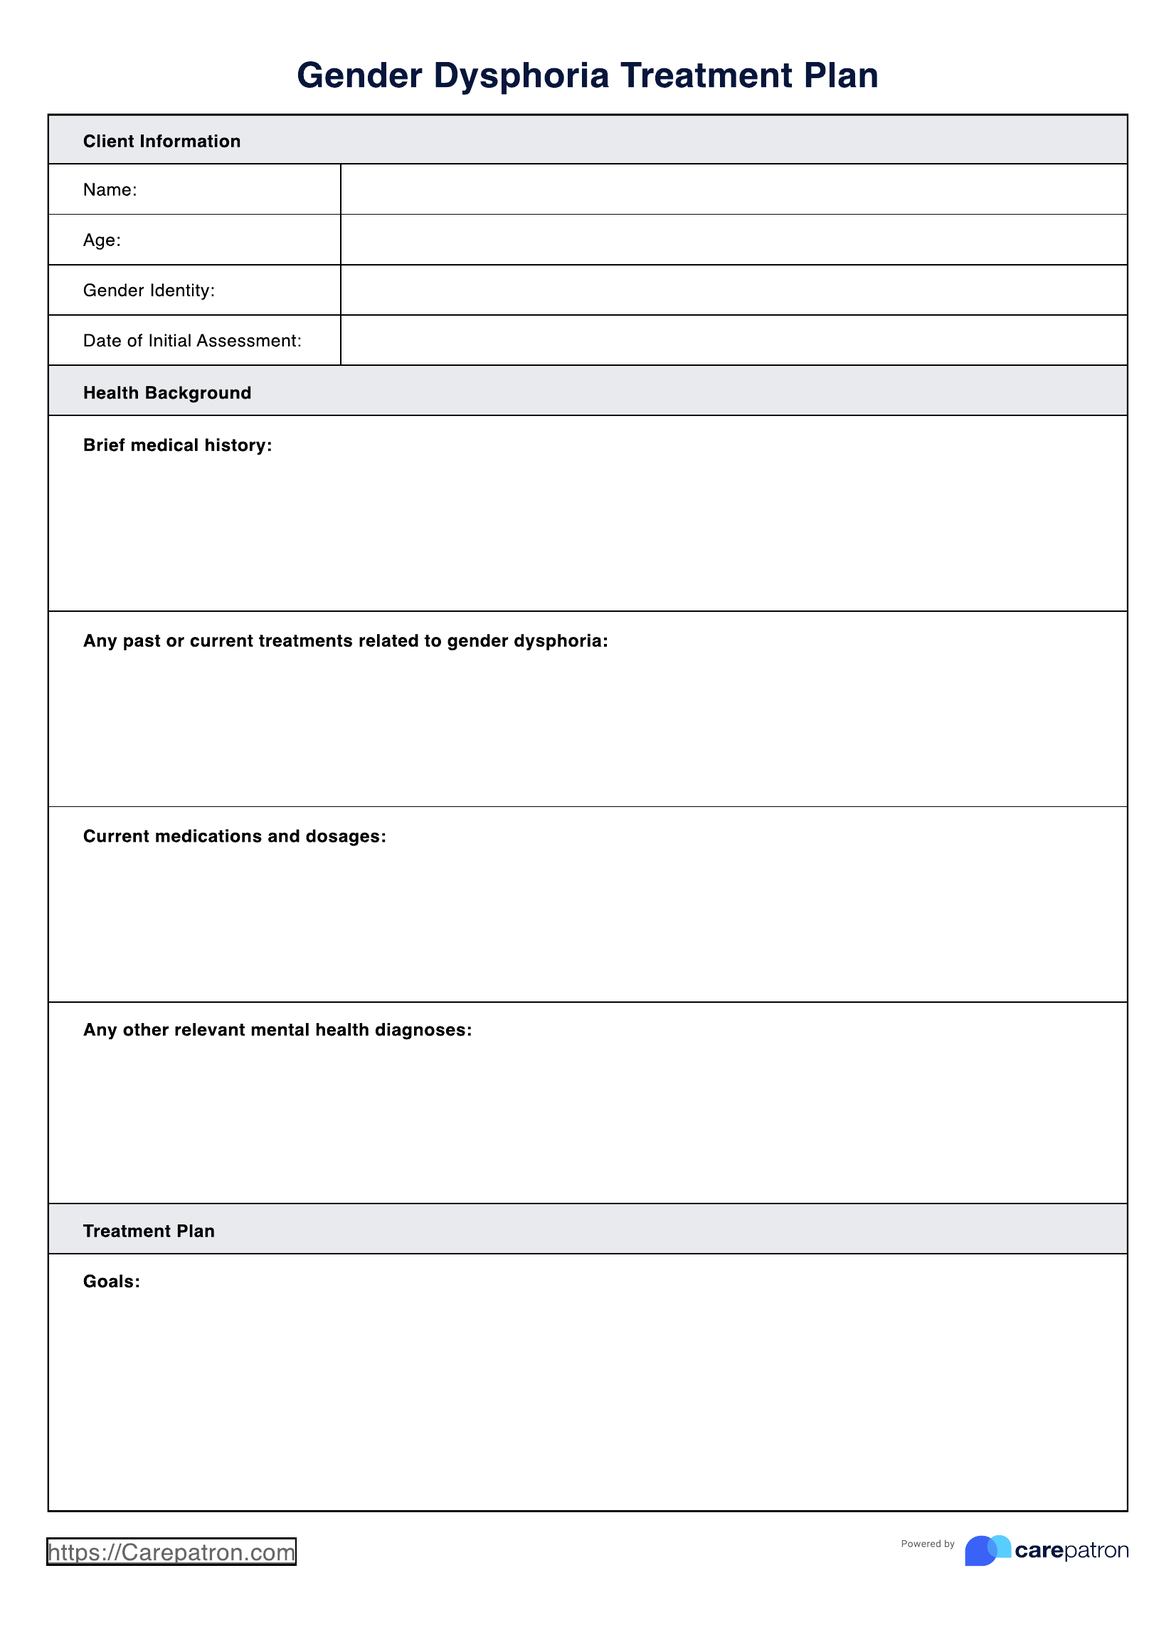 Gender Dysphoria Treatment Plans PDF Example